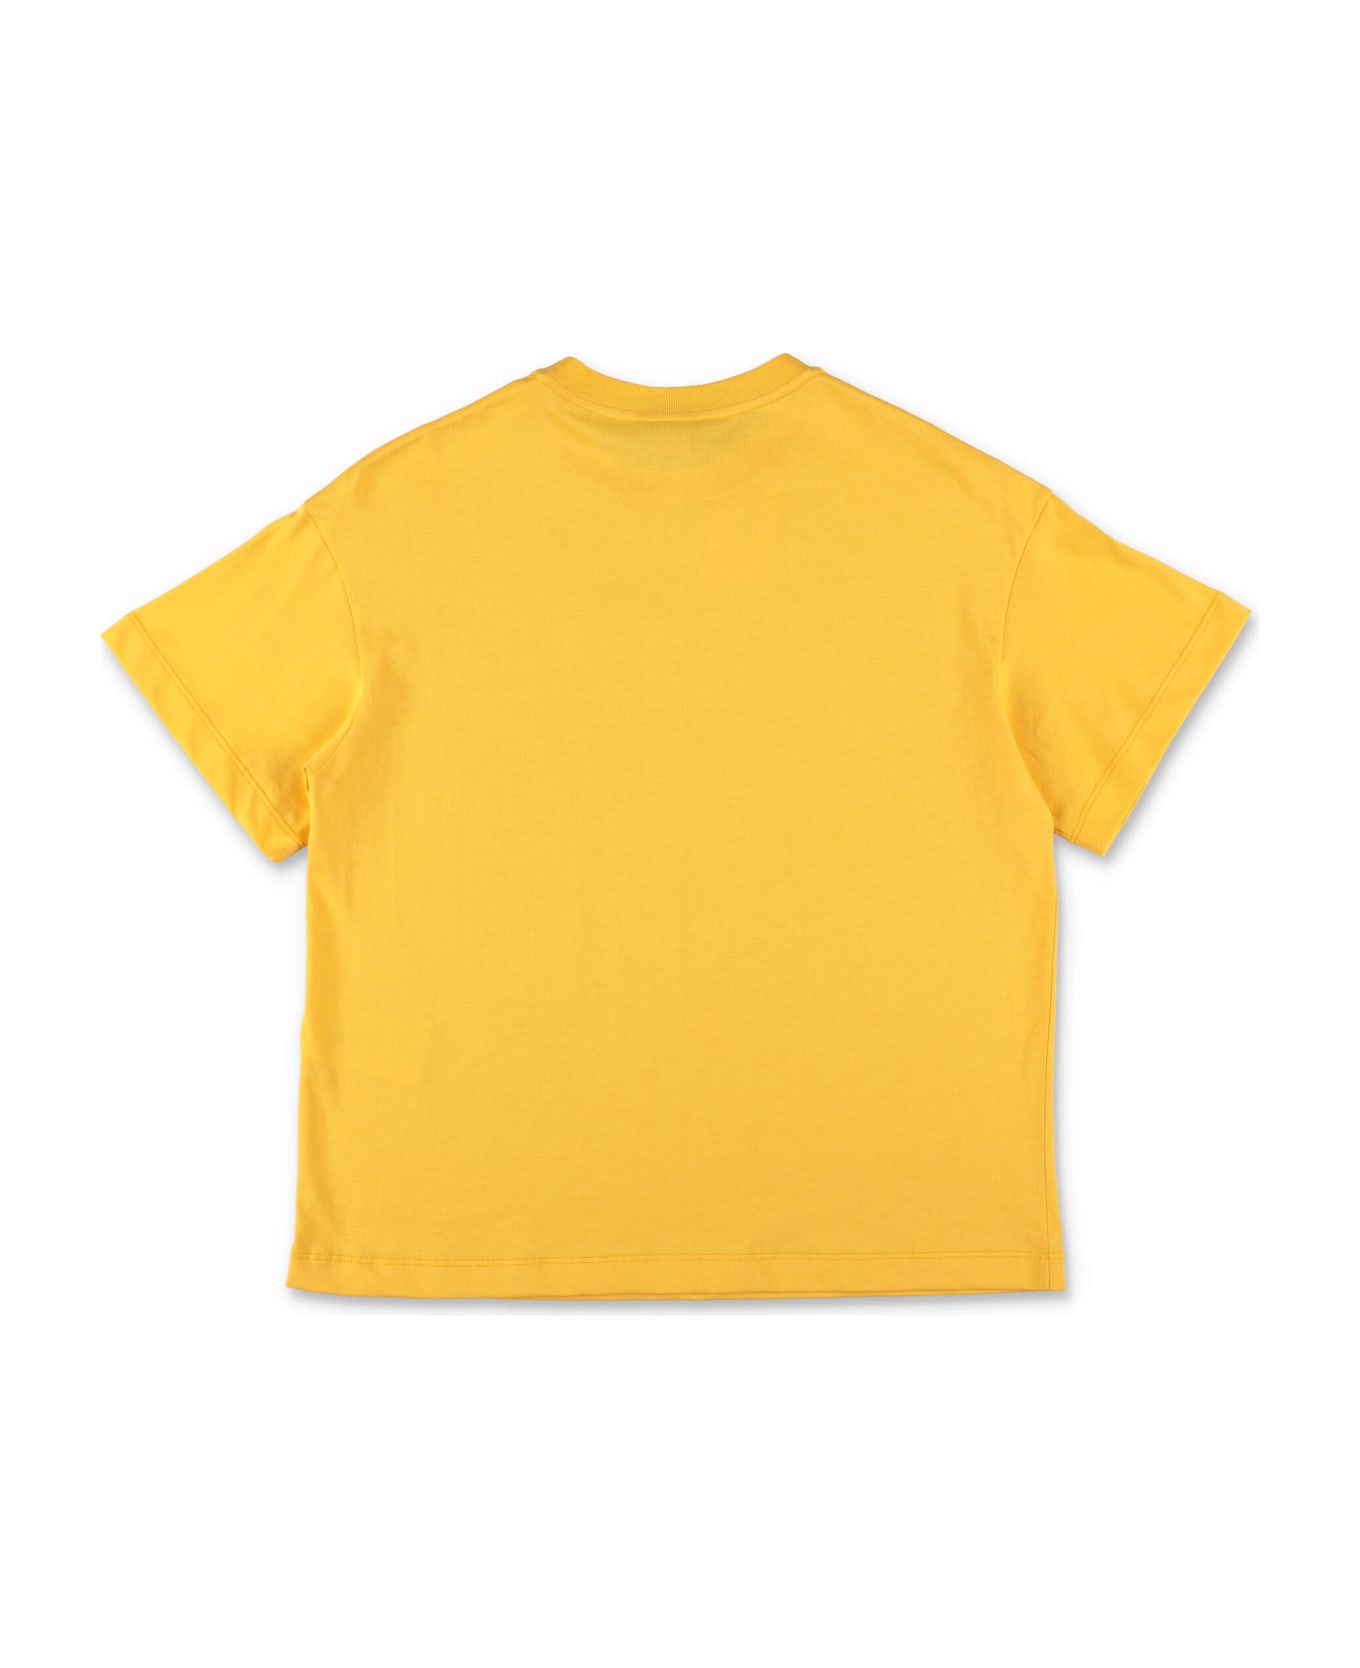 Fendi T-shirt Gialla In Jersey Di Cotone Bambino - Giallo